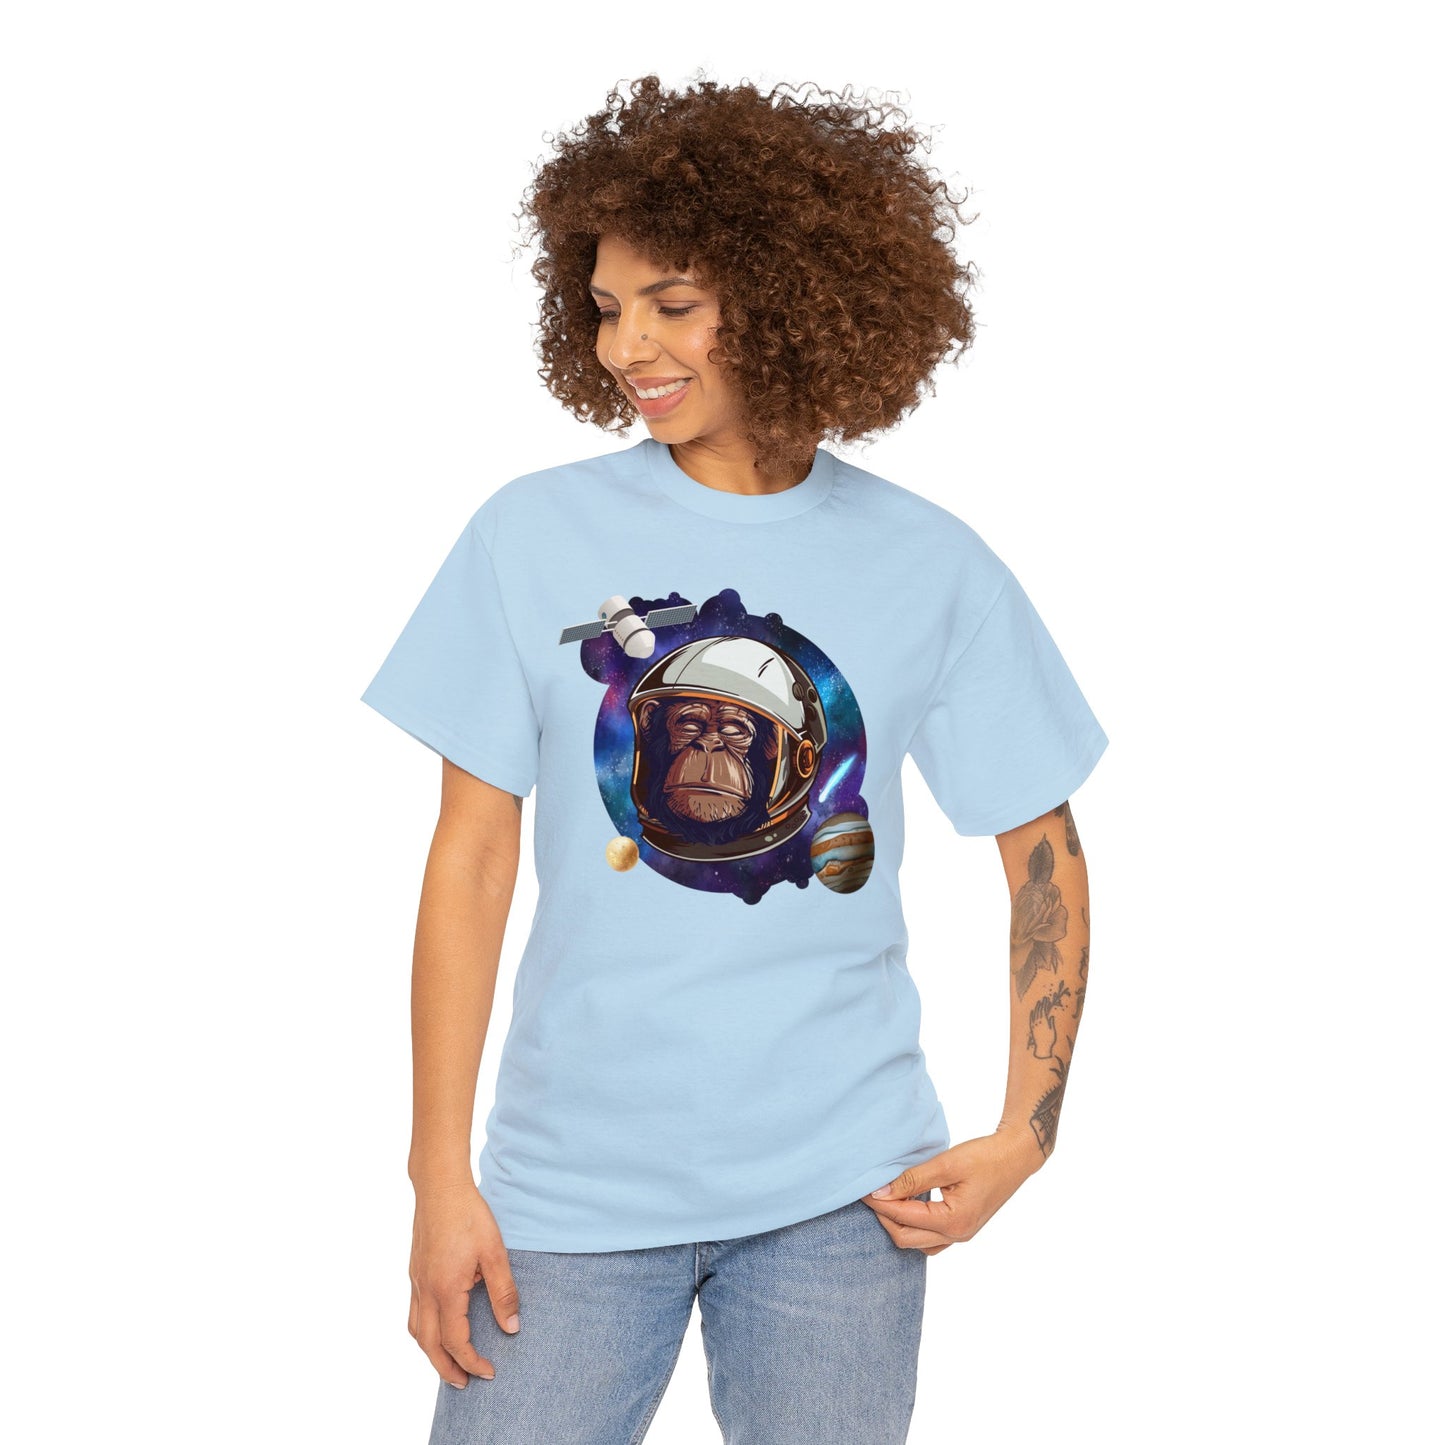 Chimp Astronaut Space Galaxy Planet Designer Graphic Tee